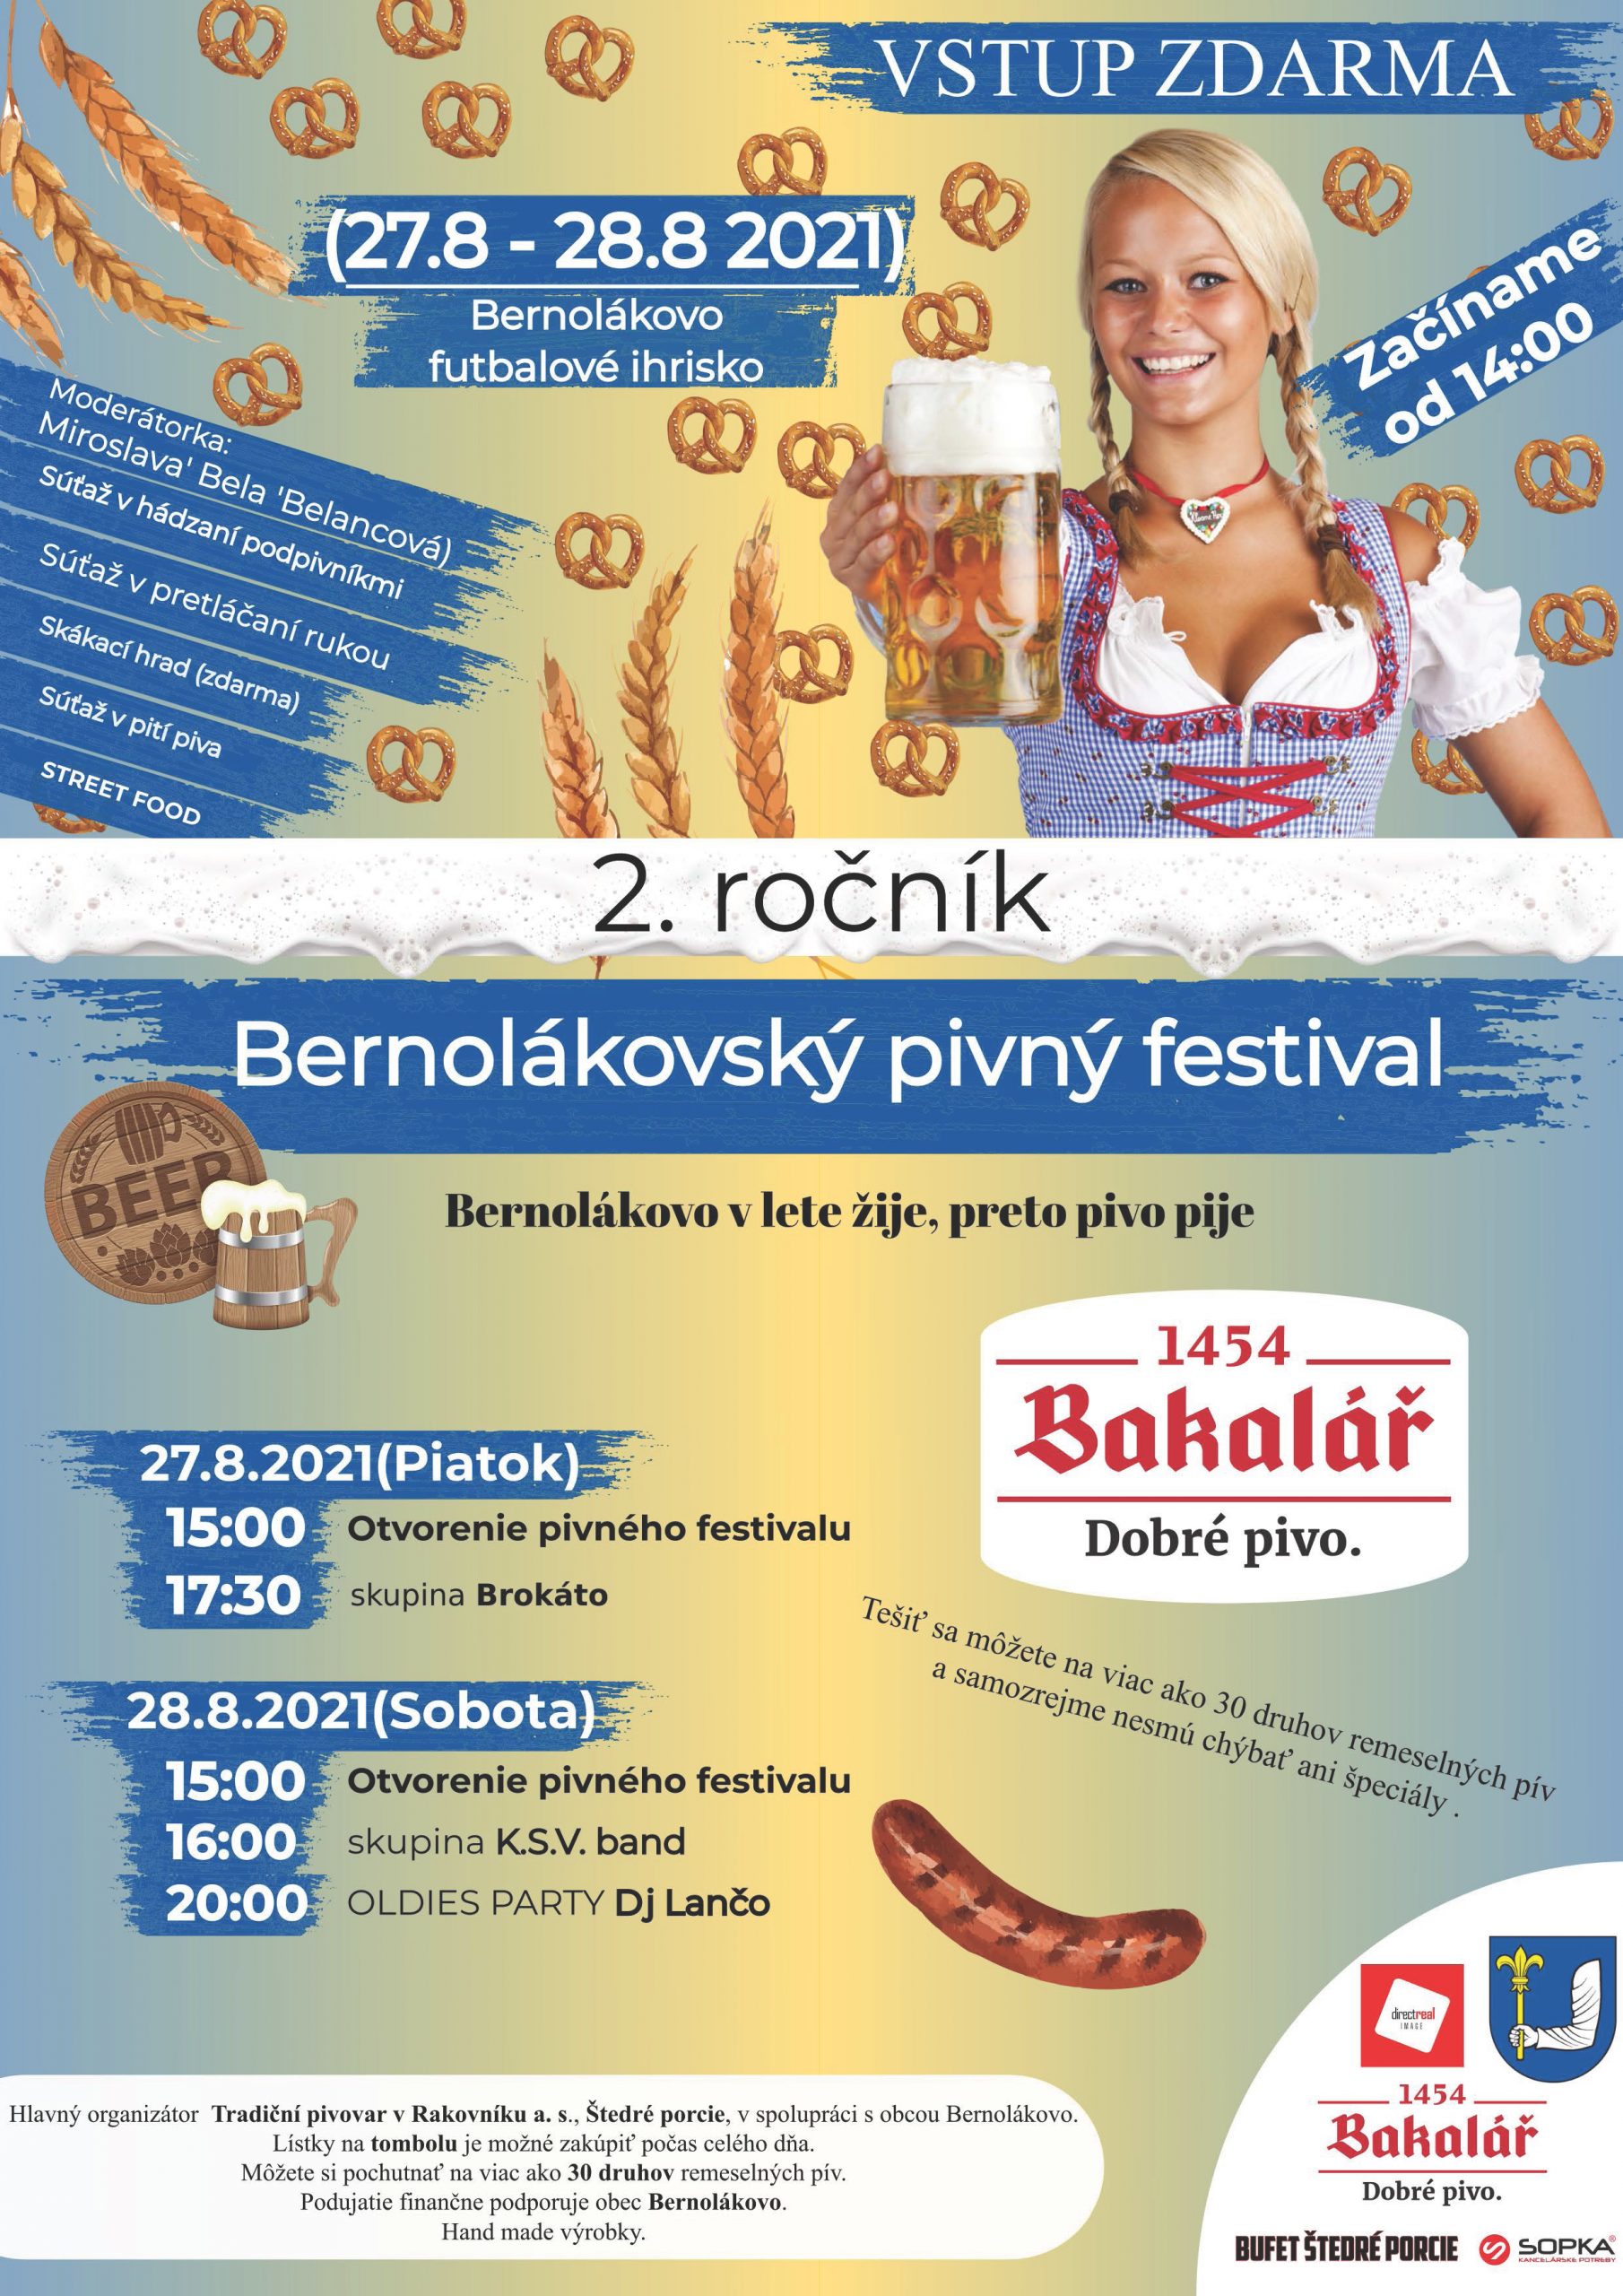 NOV - - - Bernolkovsk pivn festival 2021 - 2. ronk